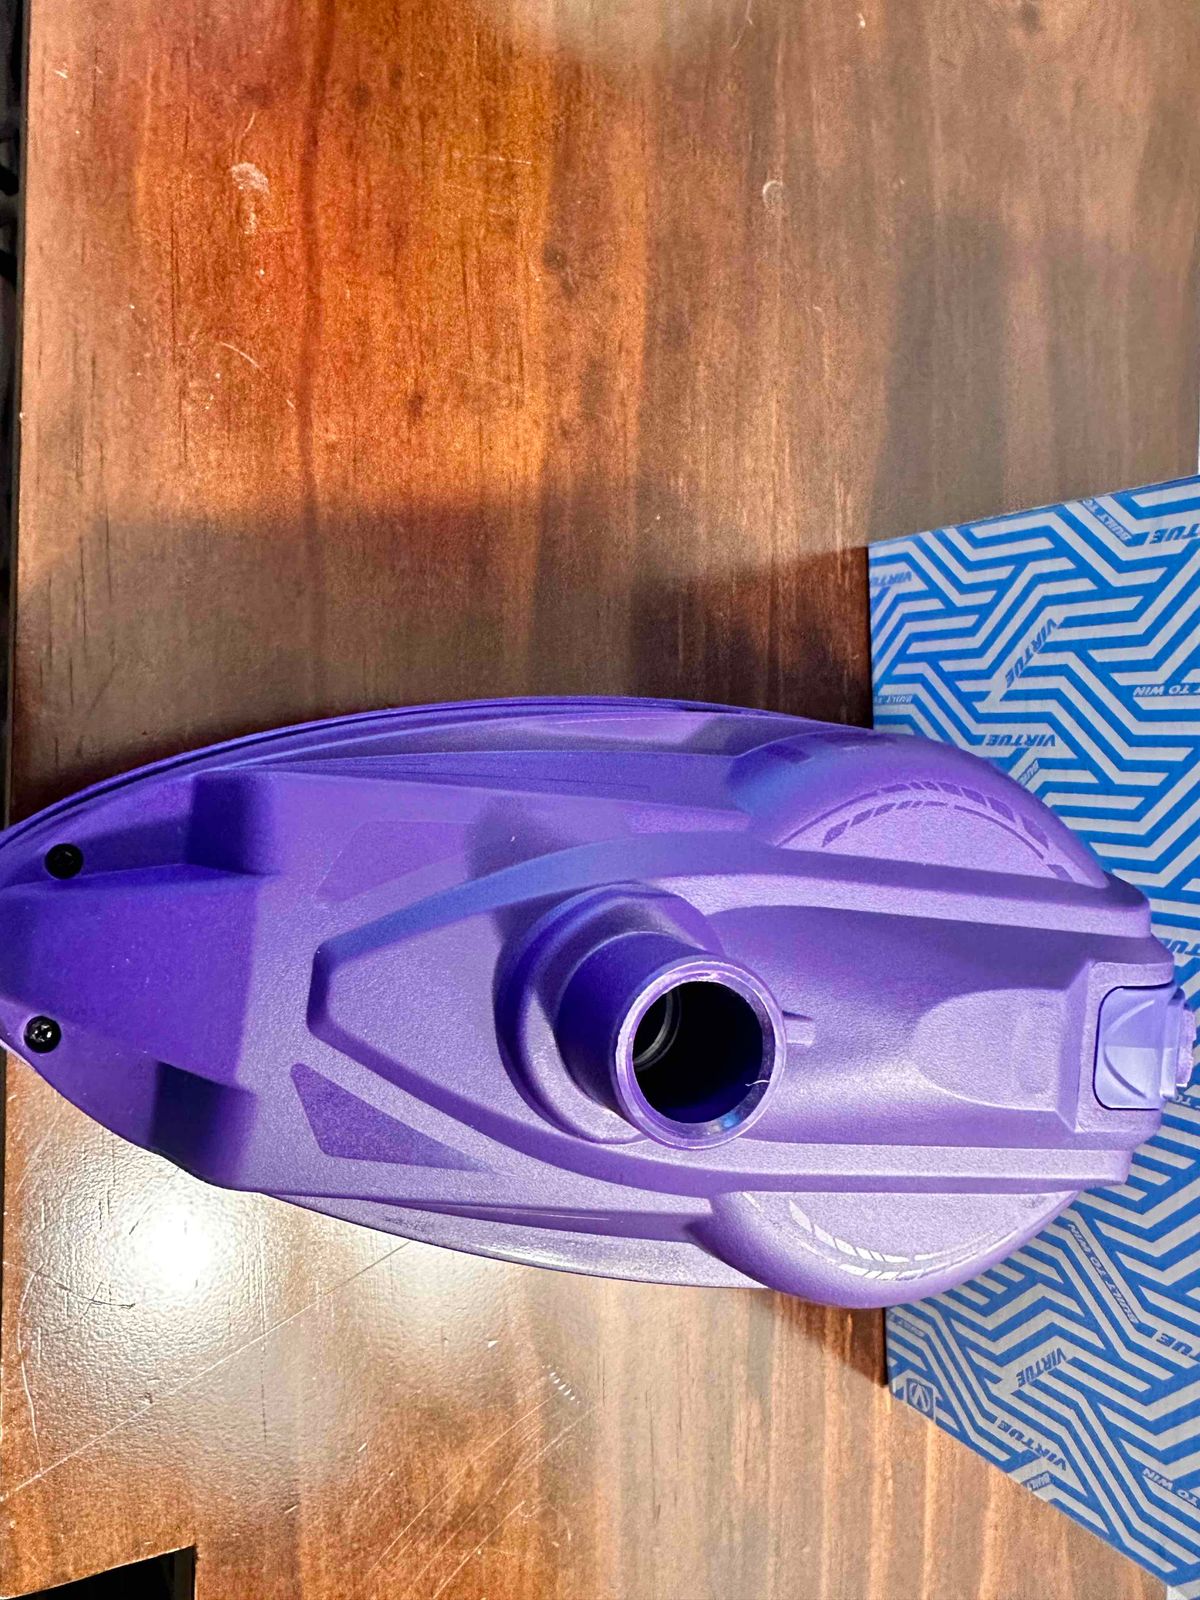 New-Purple Spire V